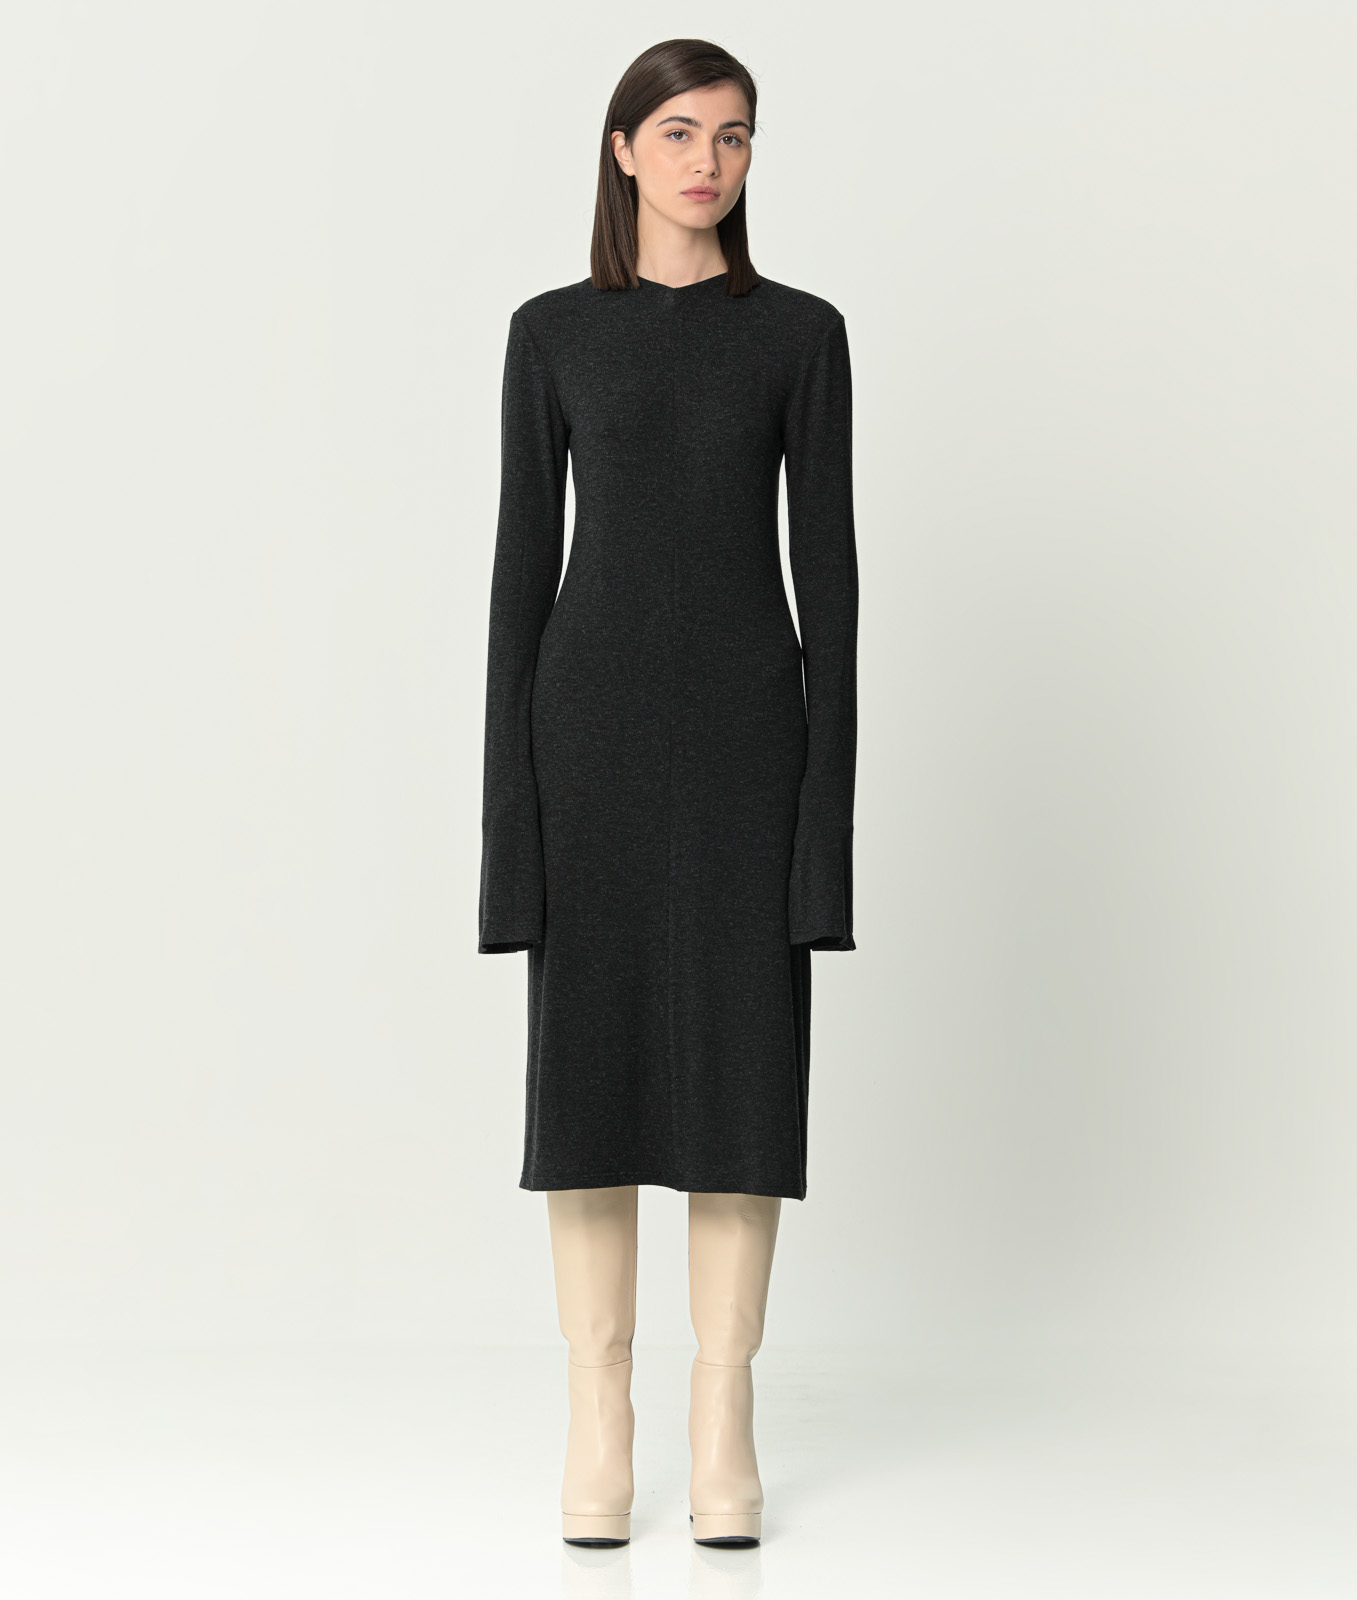 Black Knitted Dress